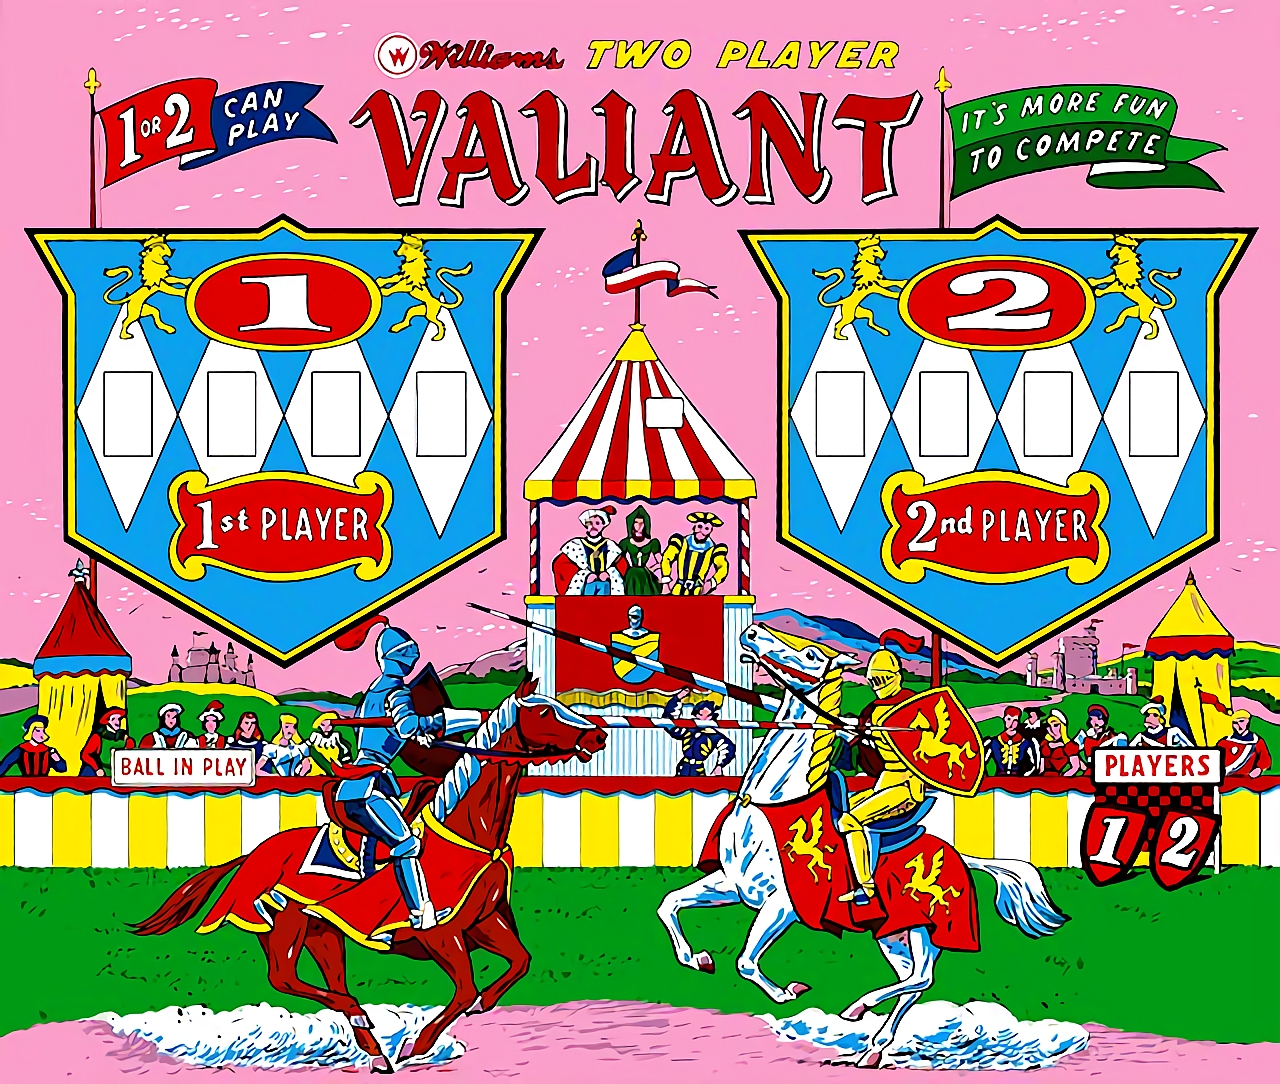 Valiant (Williams, 1962) (IkeS) Backglass